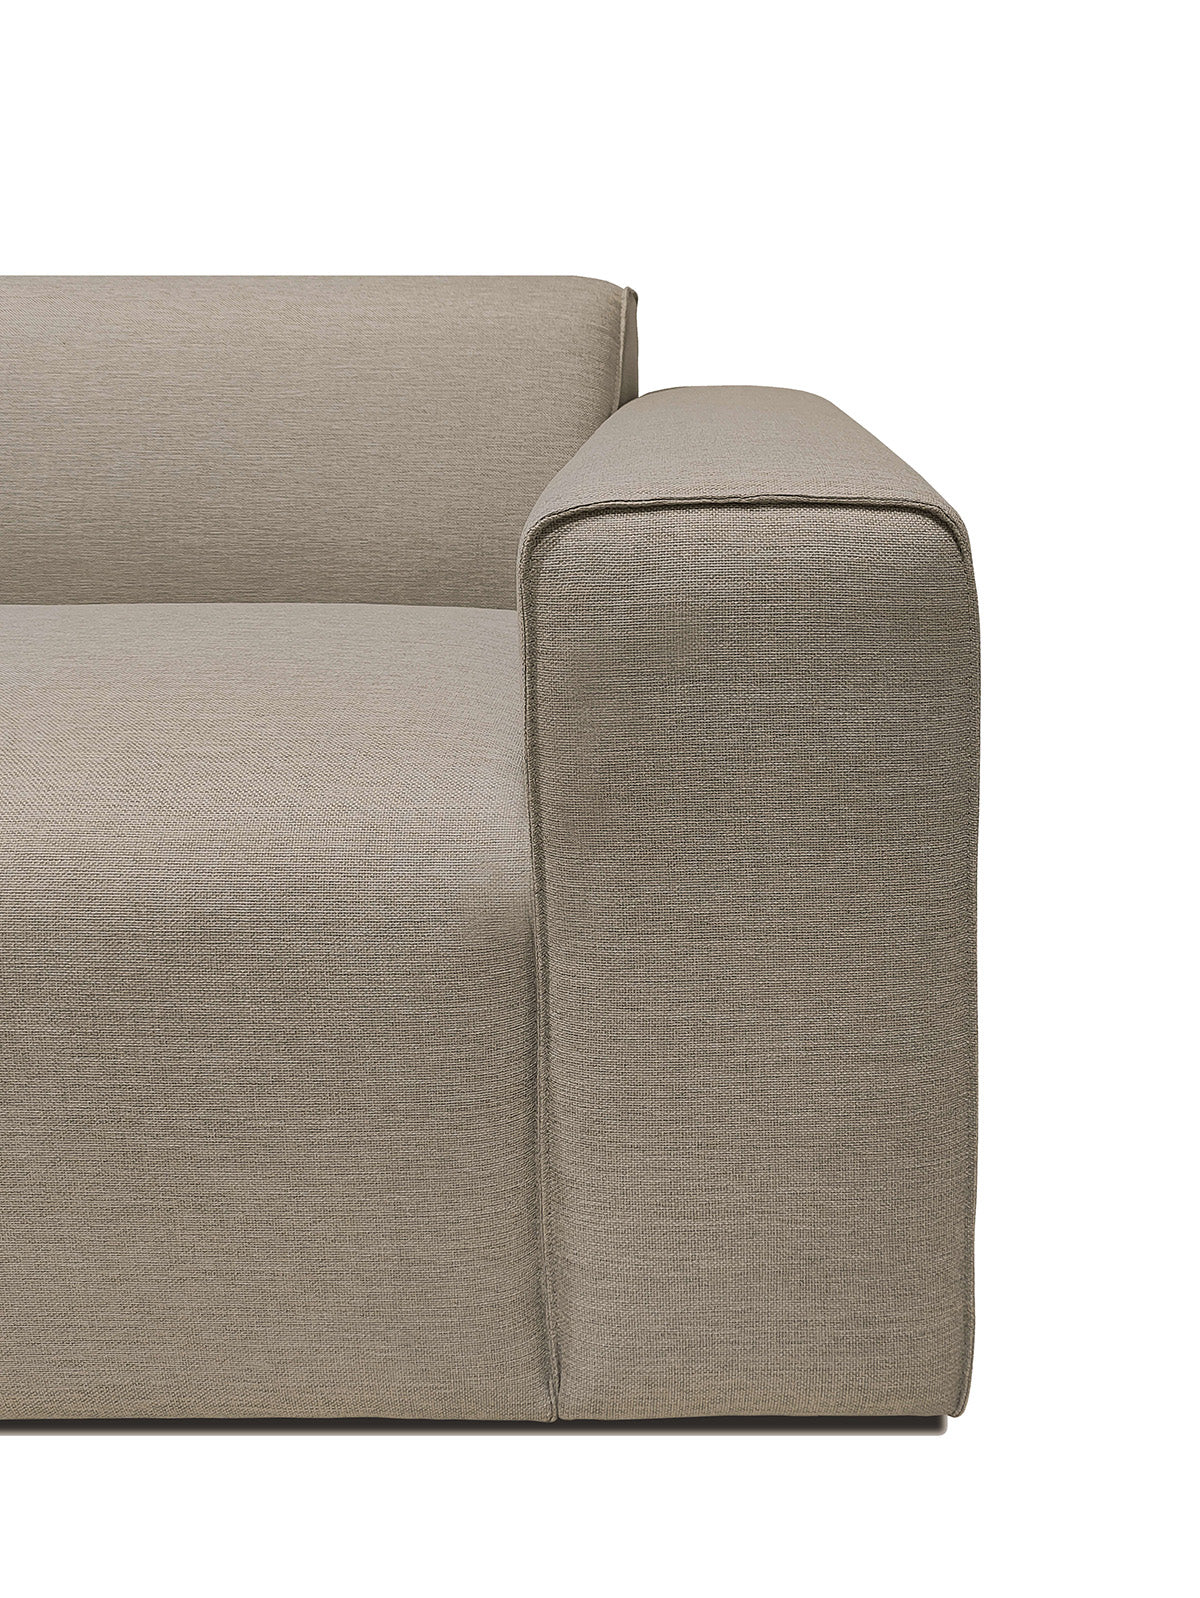 Manhattan | Chaise Lounge Sofa | Zwei Module - Sand | Samt Stoff - Links